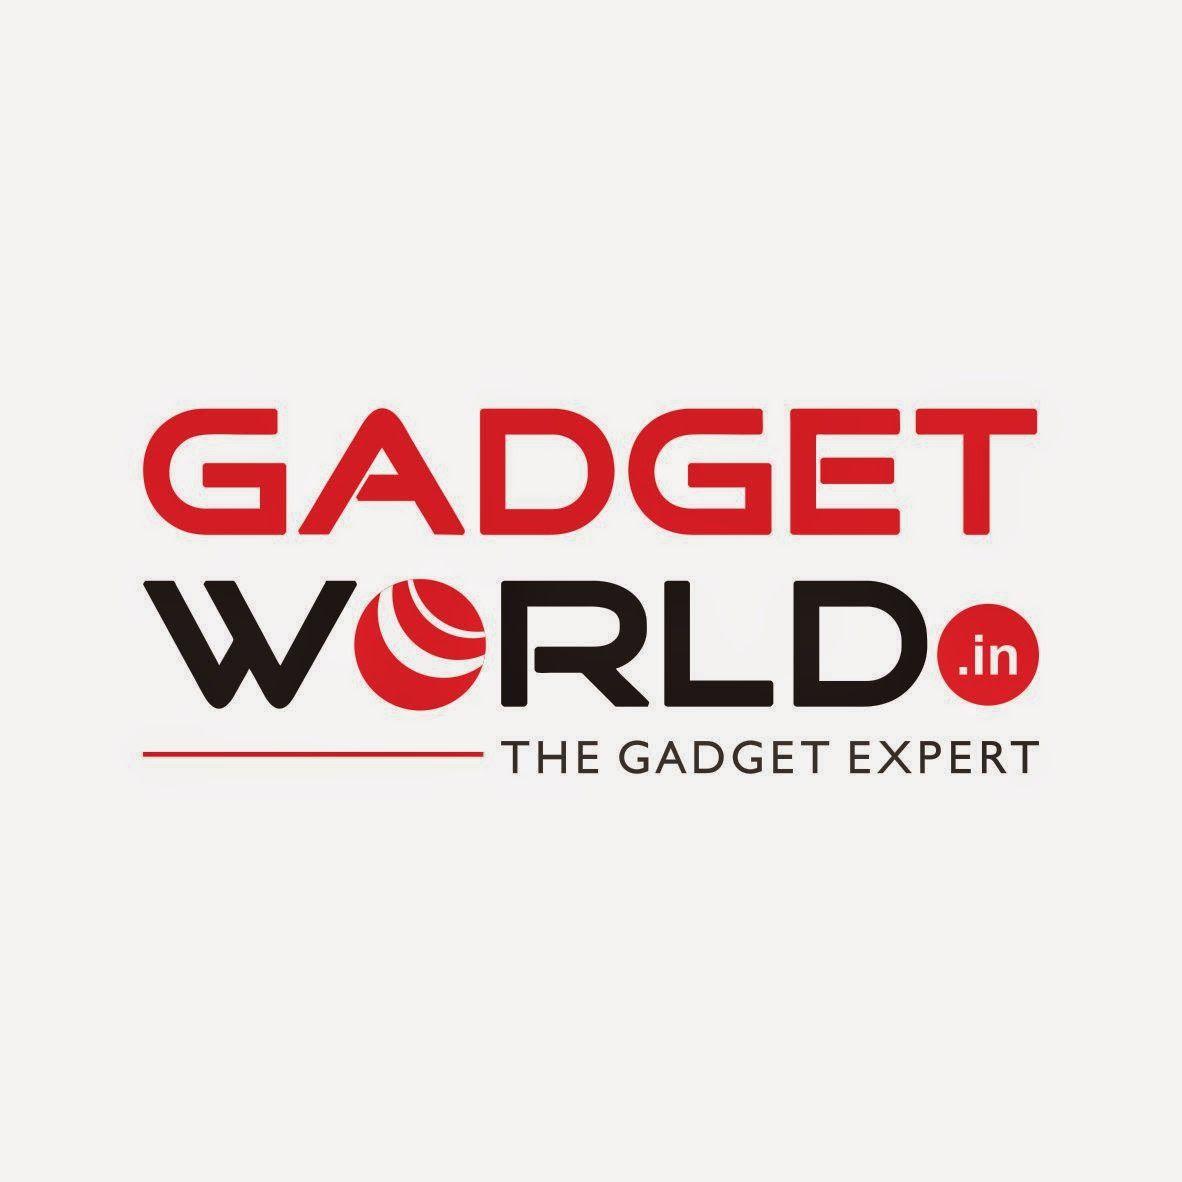 Gadgets Logo - Gadget World brand logo. Designed by Brand care communications. Bcc